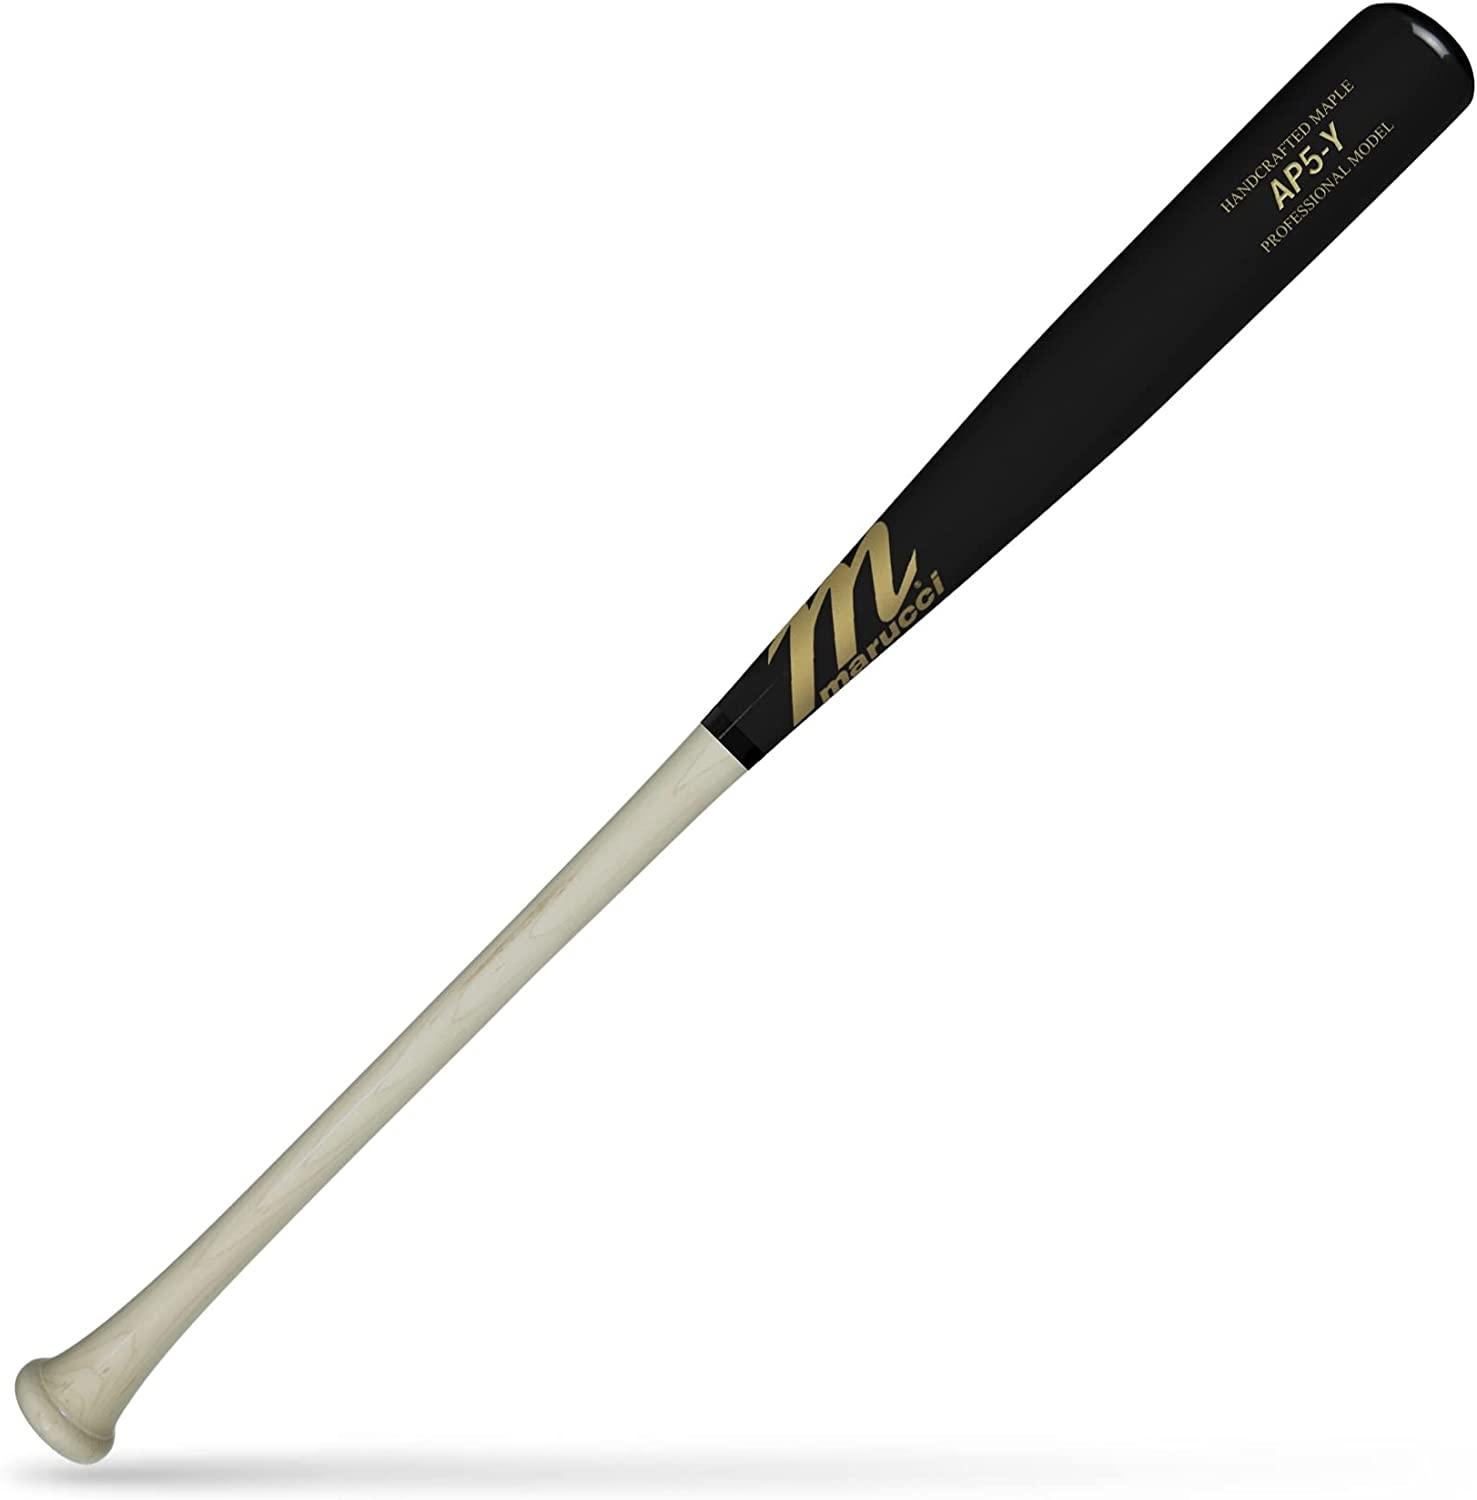 marucci-ap5-youth-model-natural-black-wood-baseball-bat-30-inch MYVE3AP5-NBK-30 Marucci  The Marucci AP5 Youth Wood Bat is designed to help young